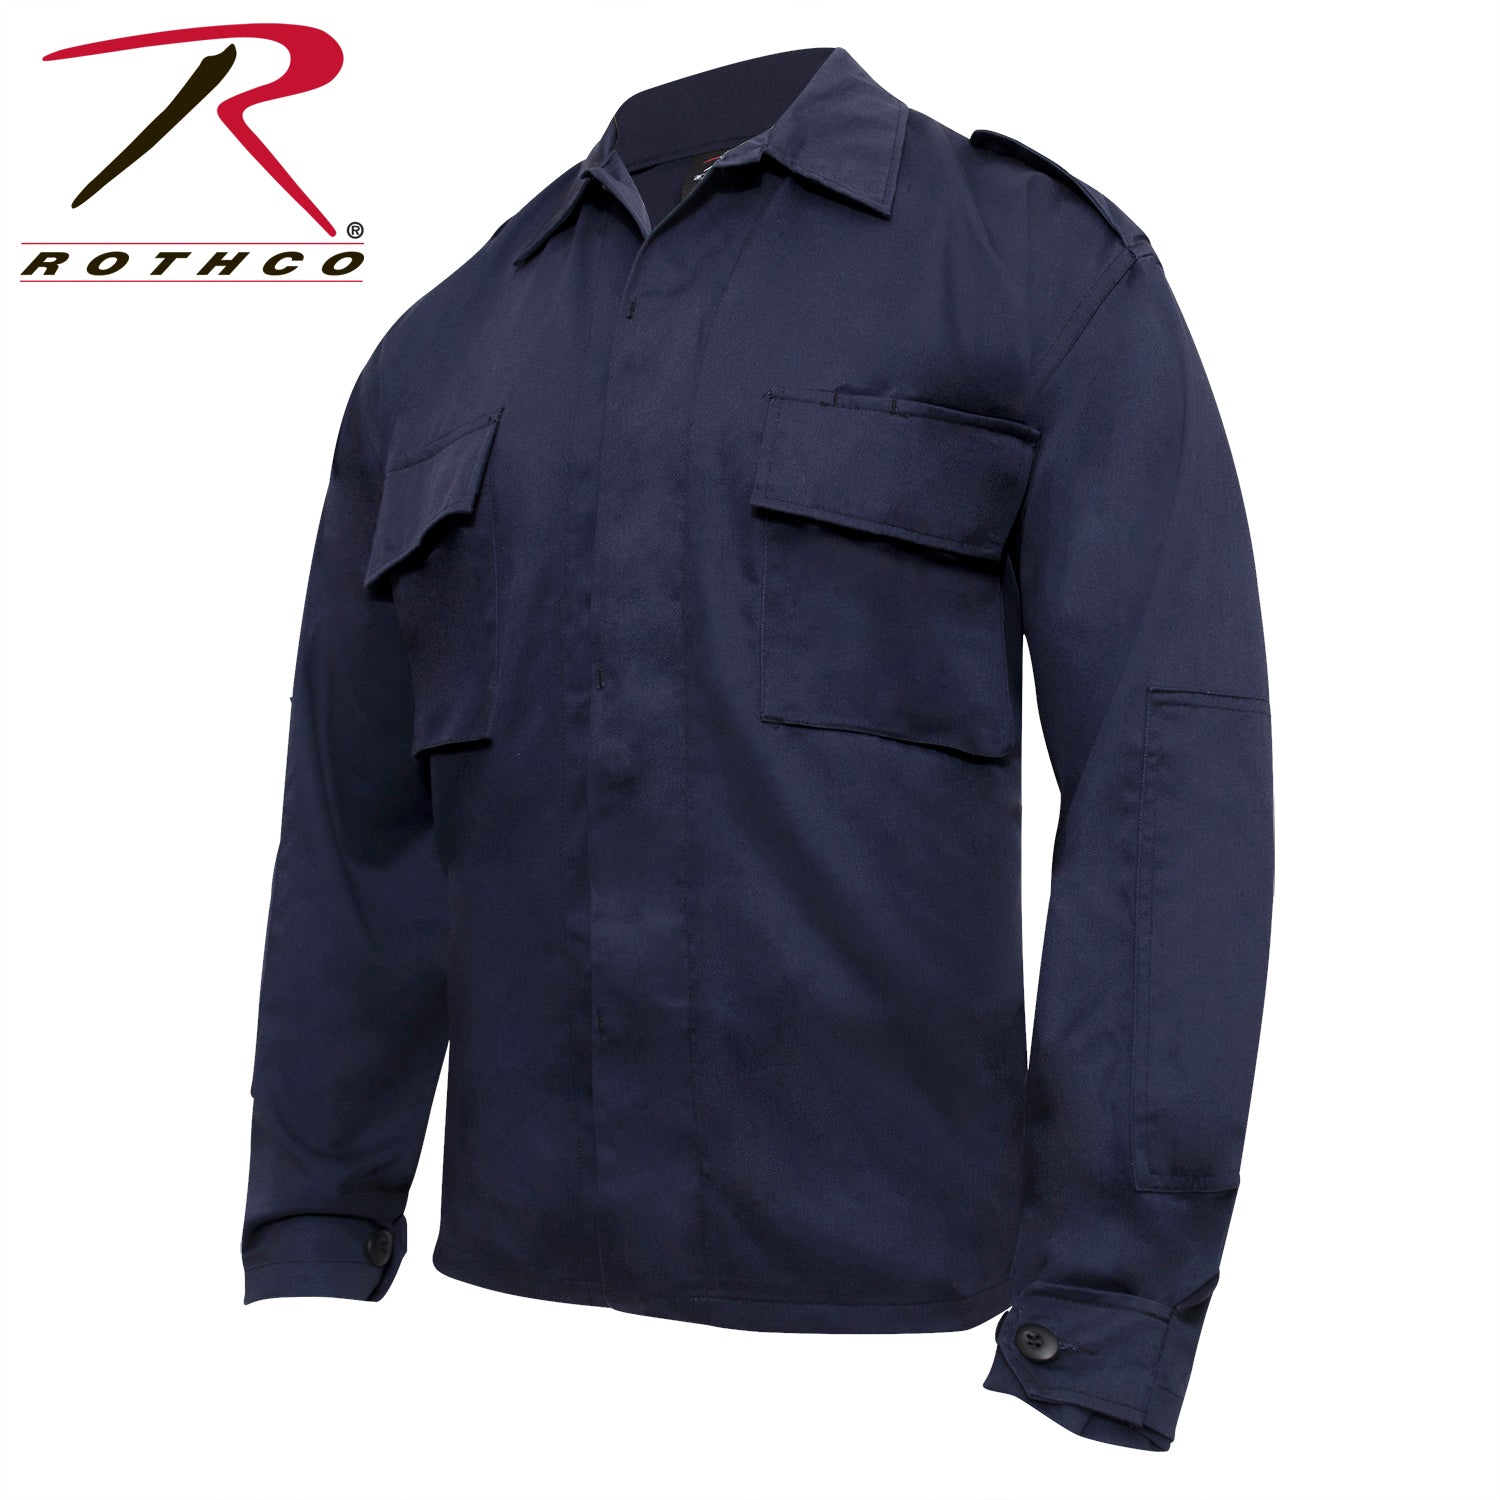 Rothco Tactical 2 Pocket BDU (Battle Dress Uniform) Shirt - Tactical Choice Plus